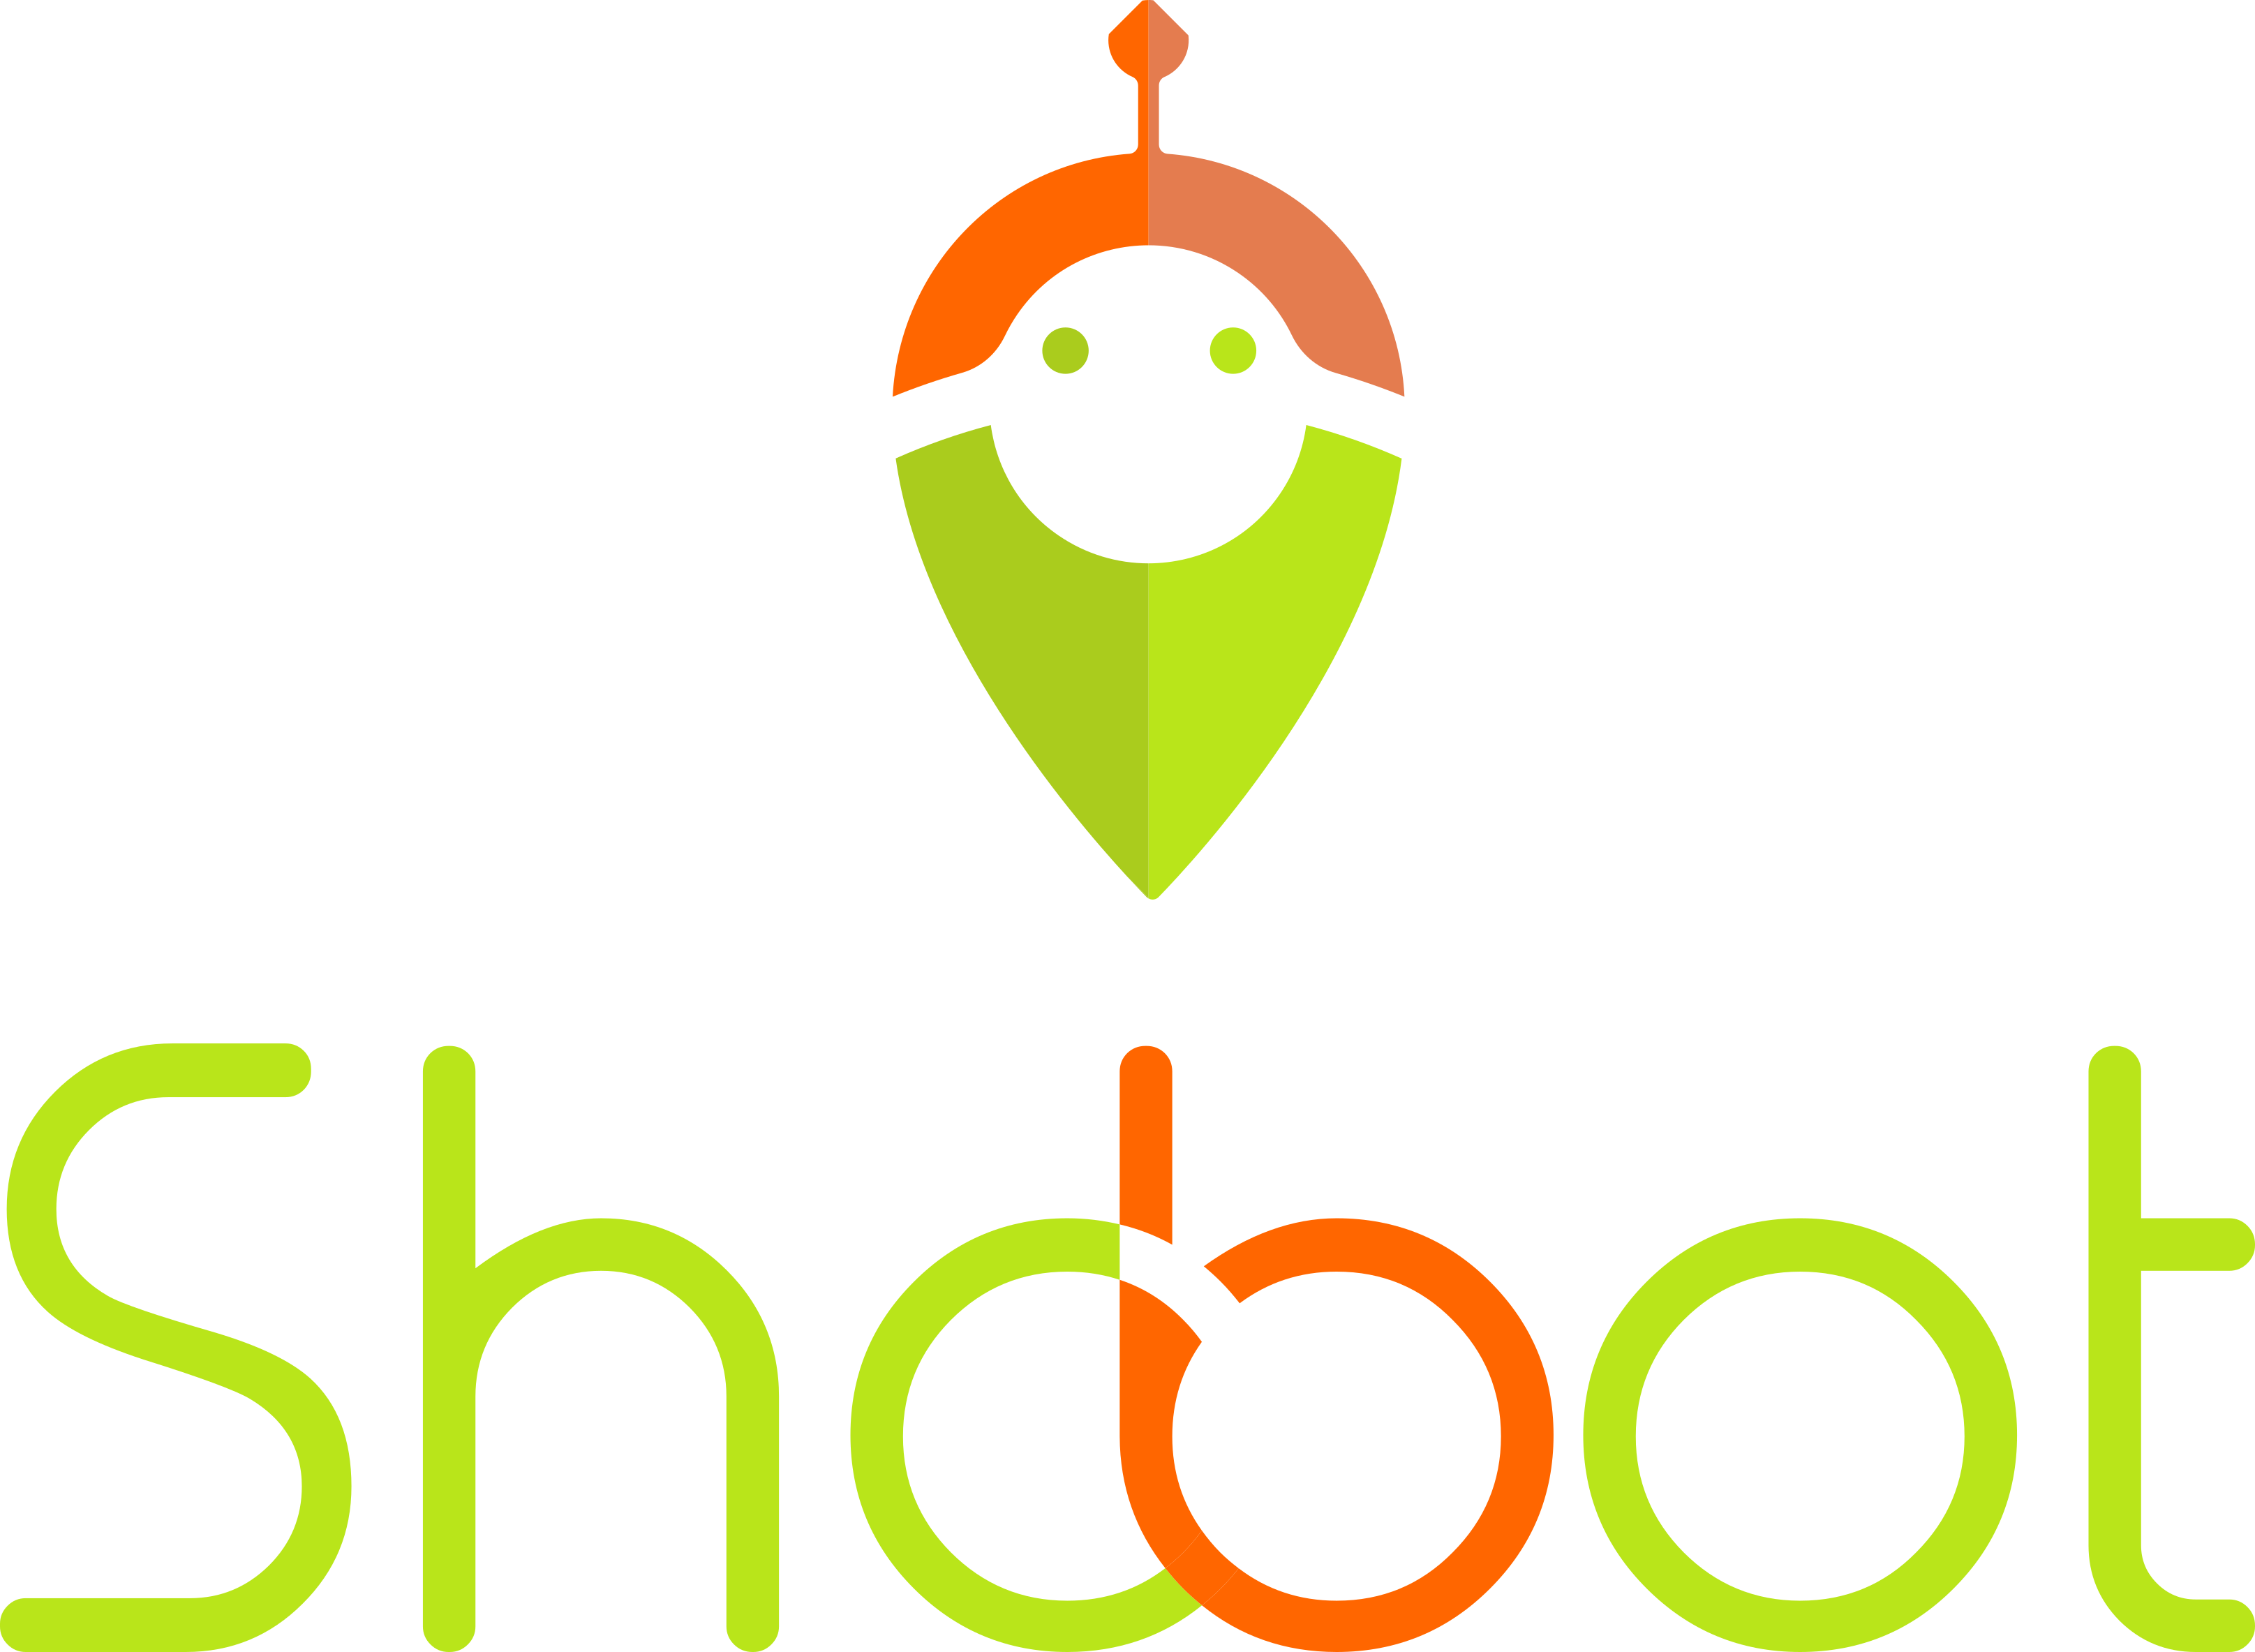 Shobot